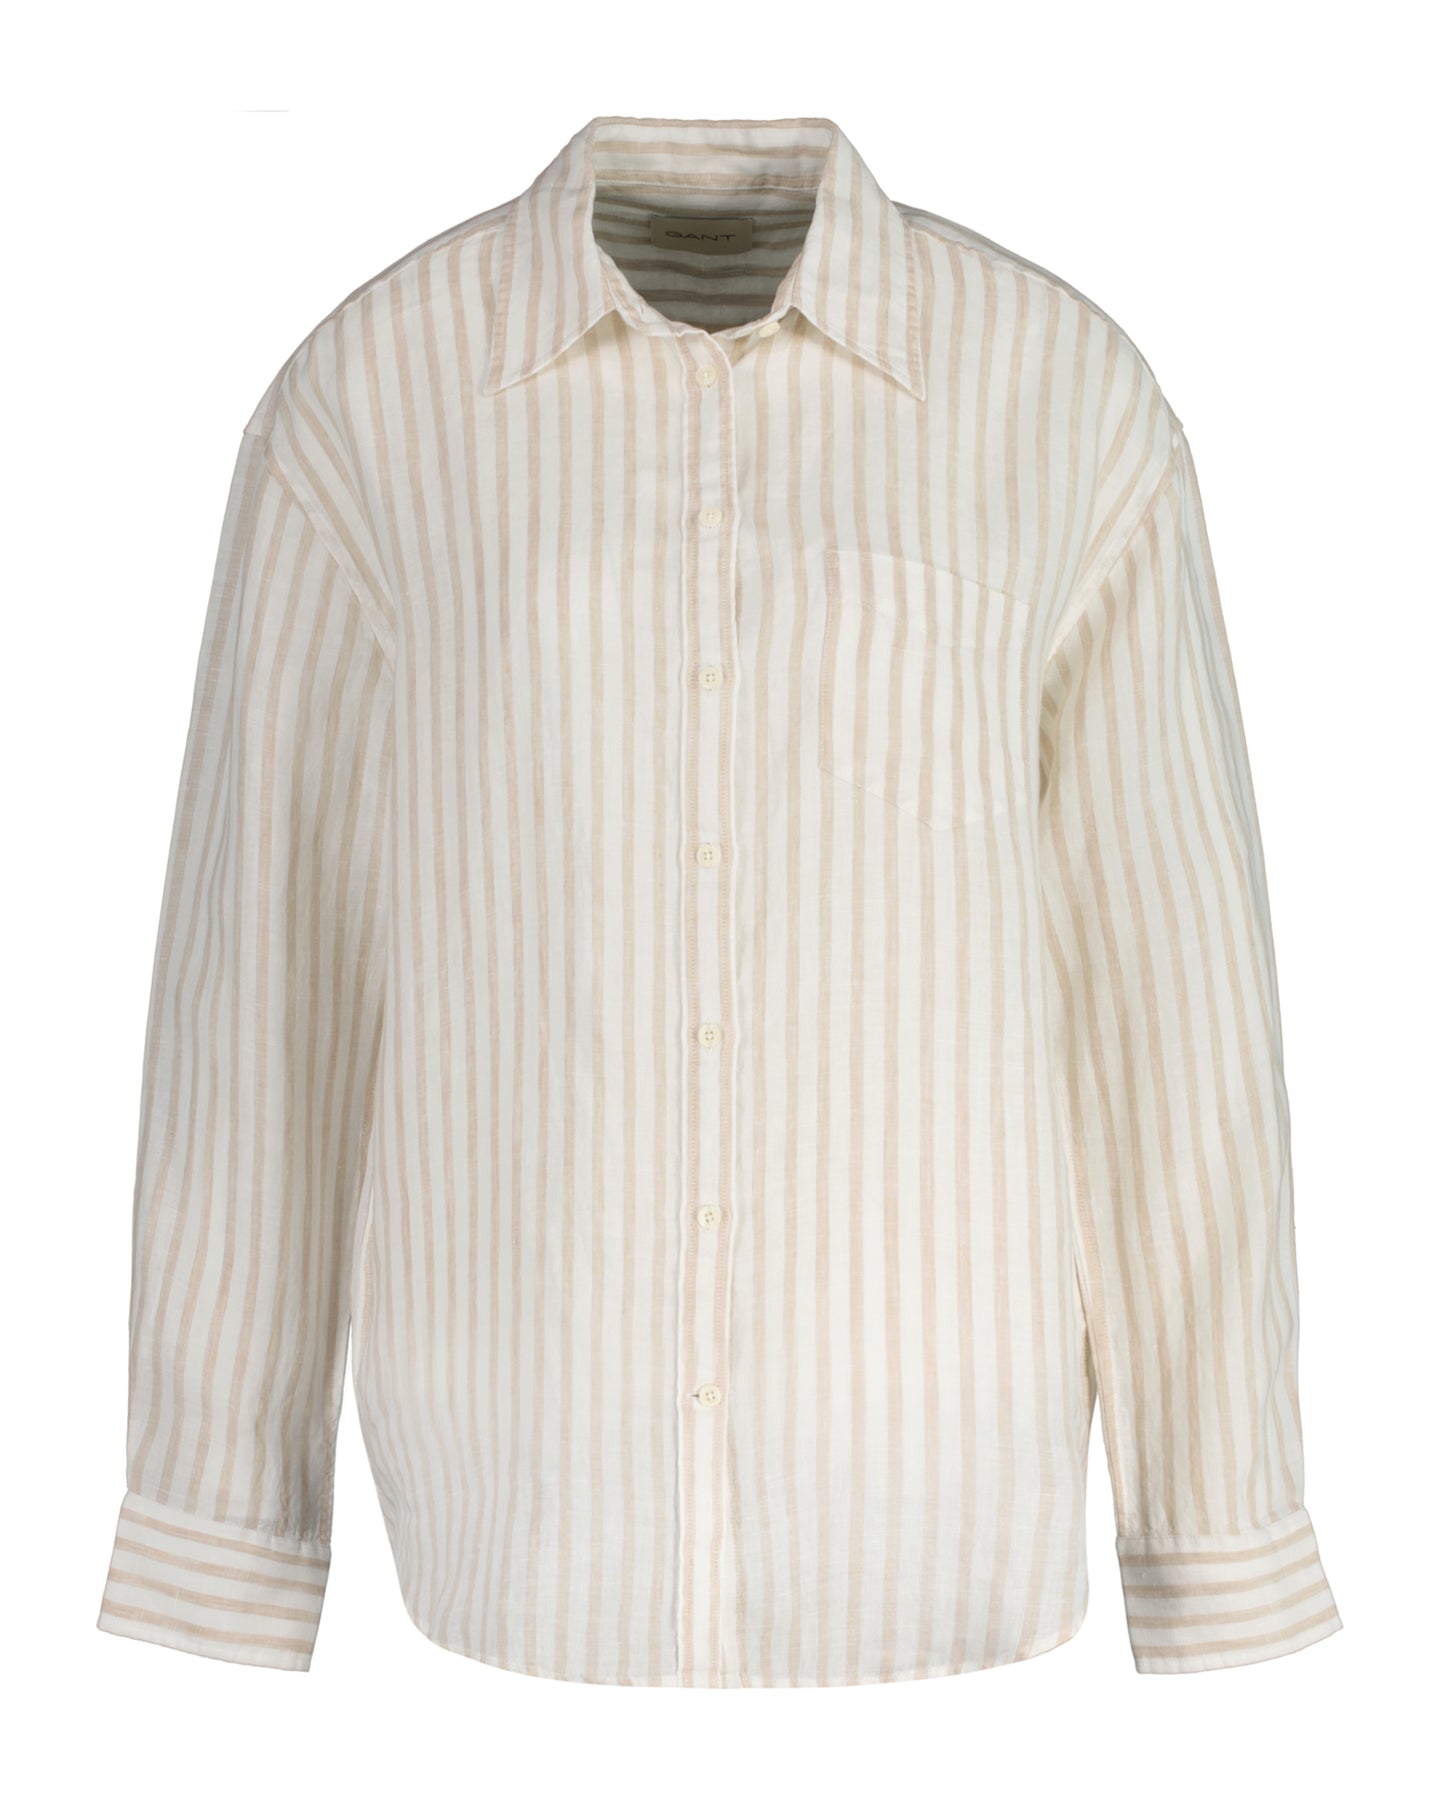 Rel Striped Linen Shirt - Dry Sand